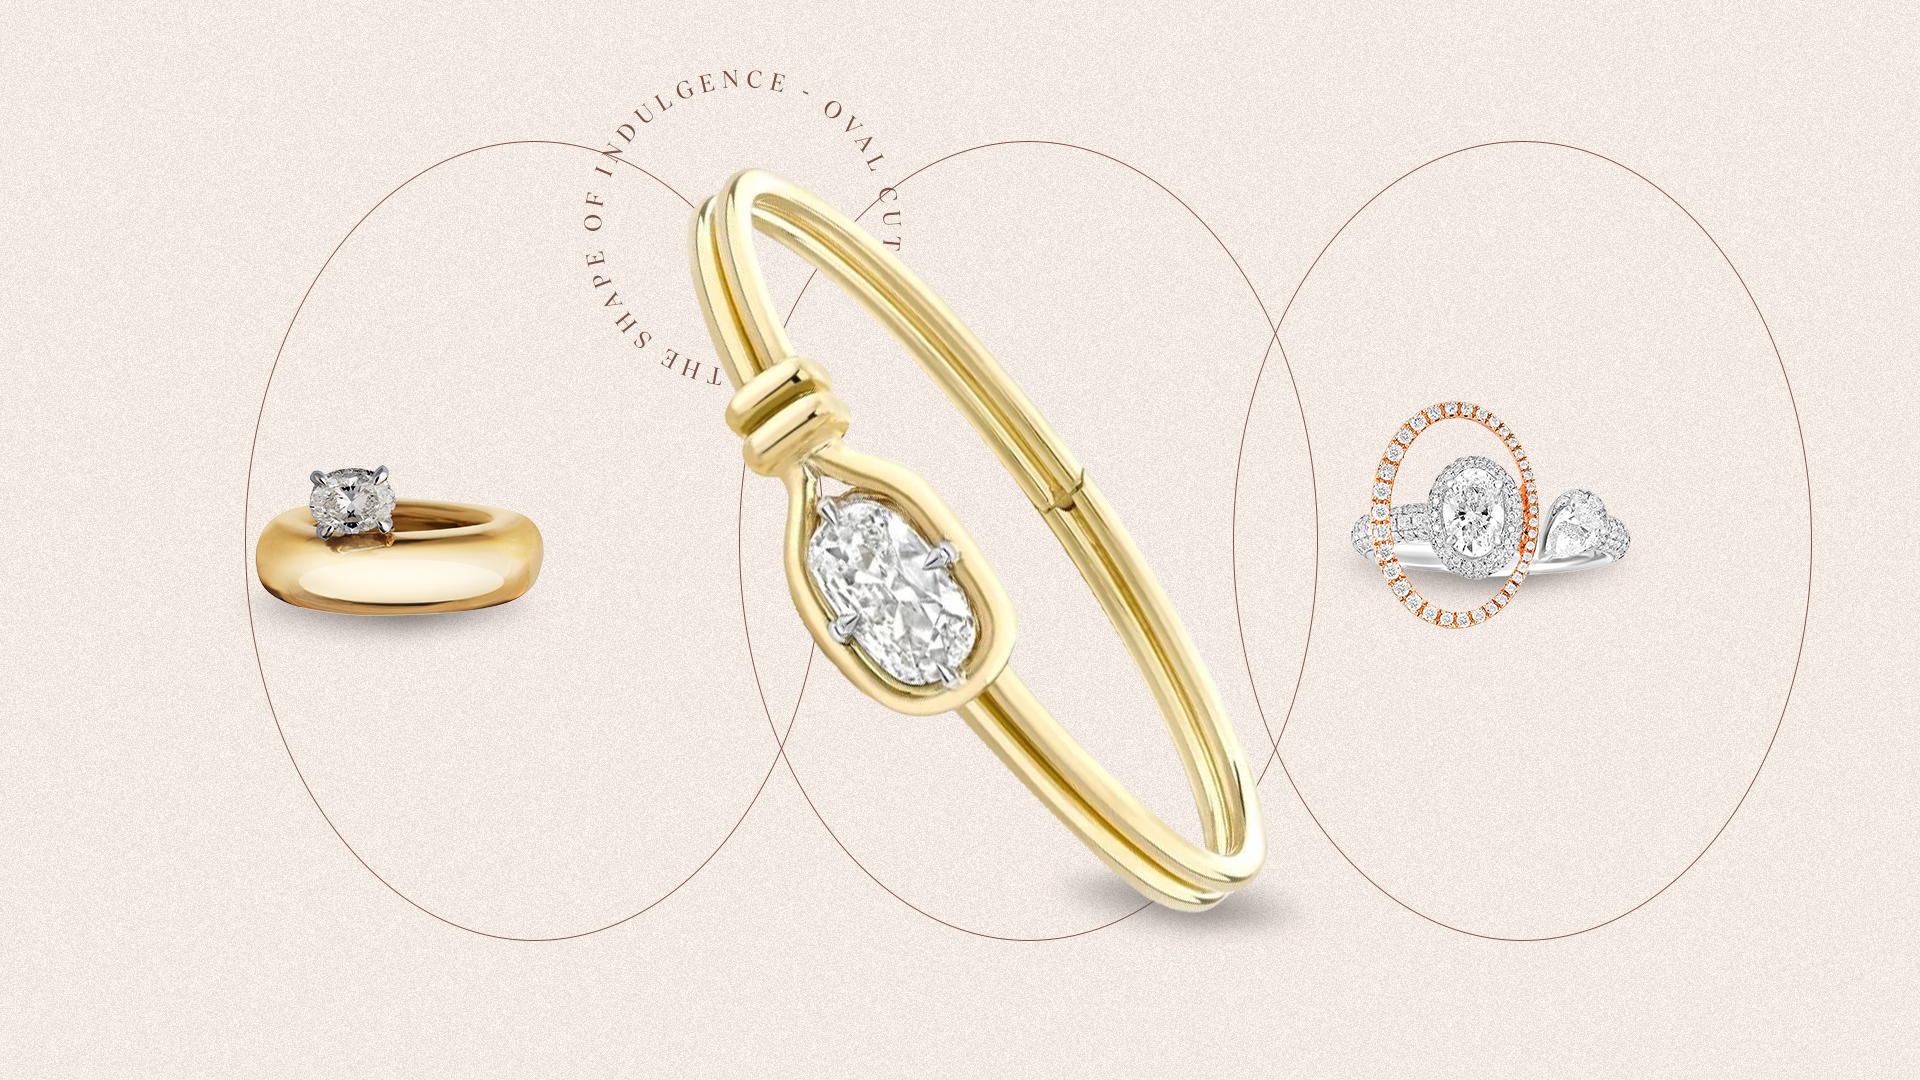 Gorgeous oval cut diamond rings